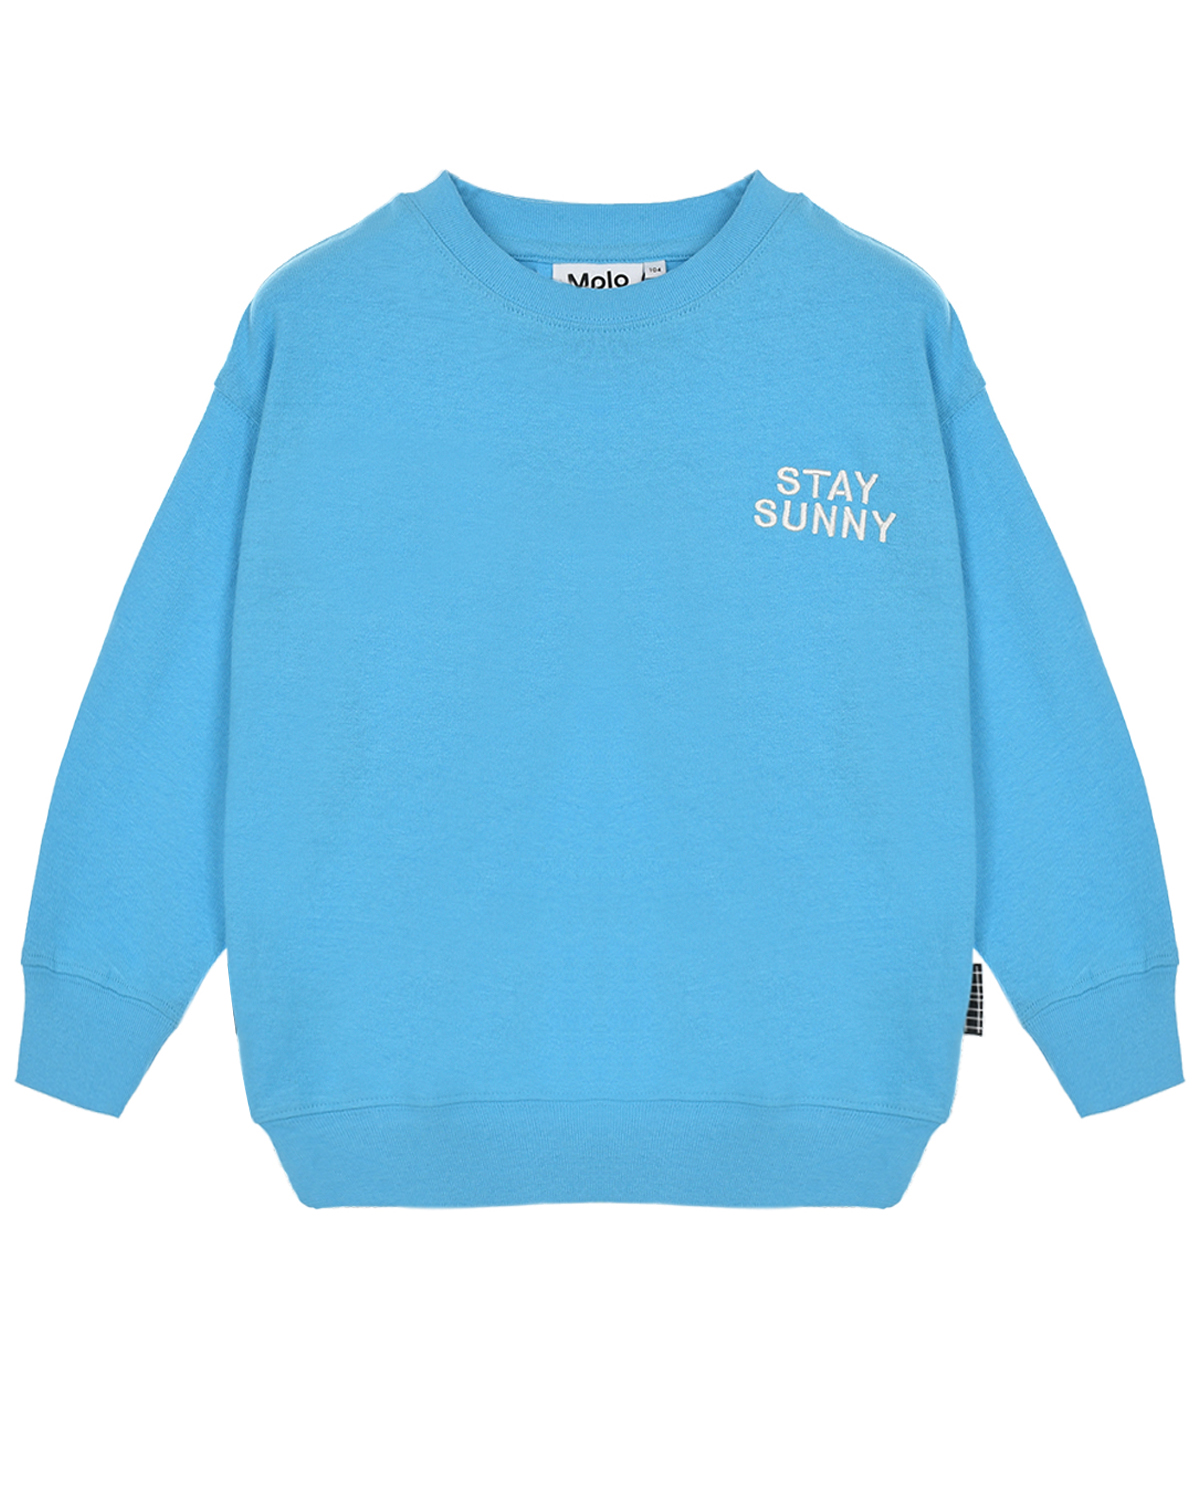 Голубой свитшот с надписью "Stay Sunny" Molo, размер 128 - фото 1